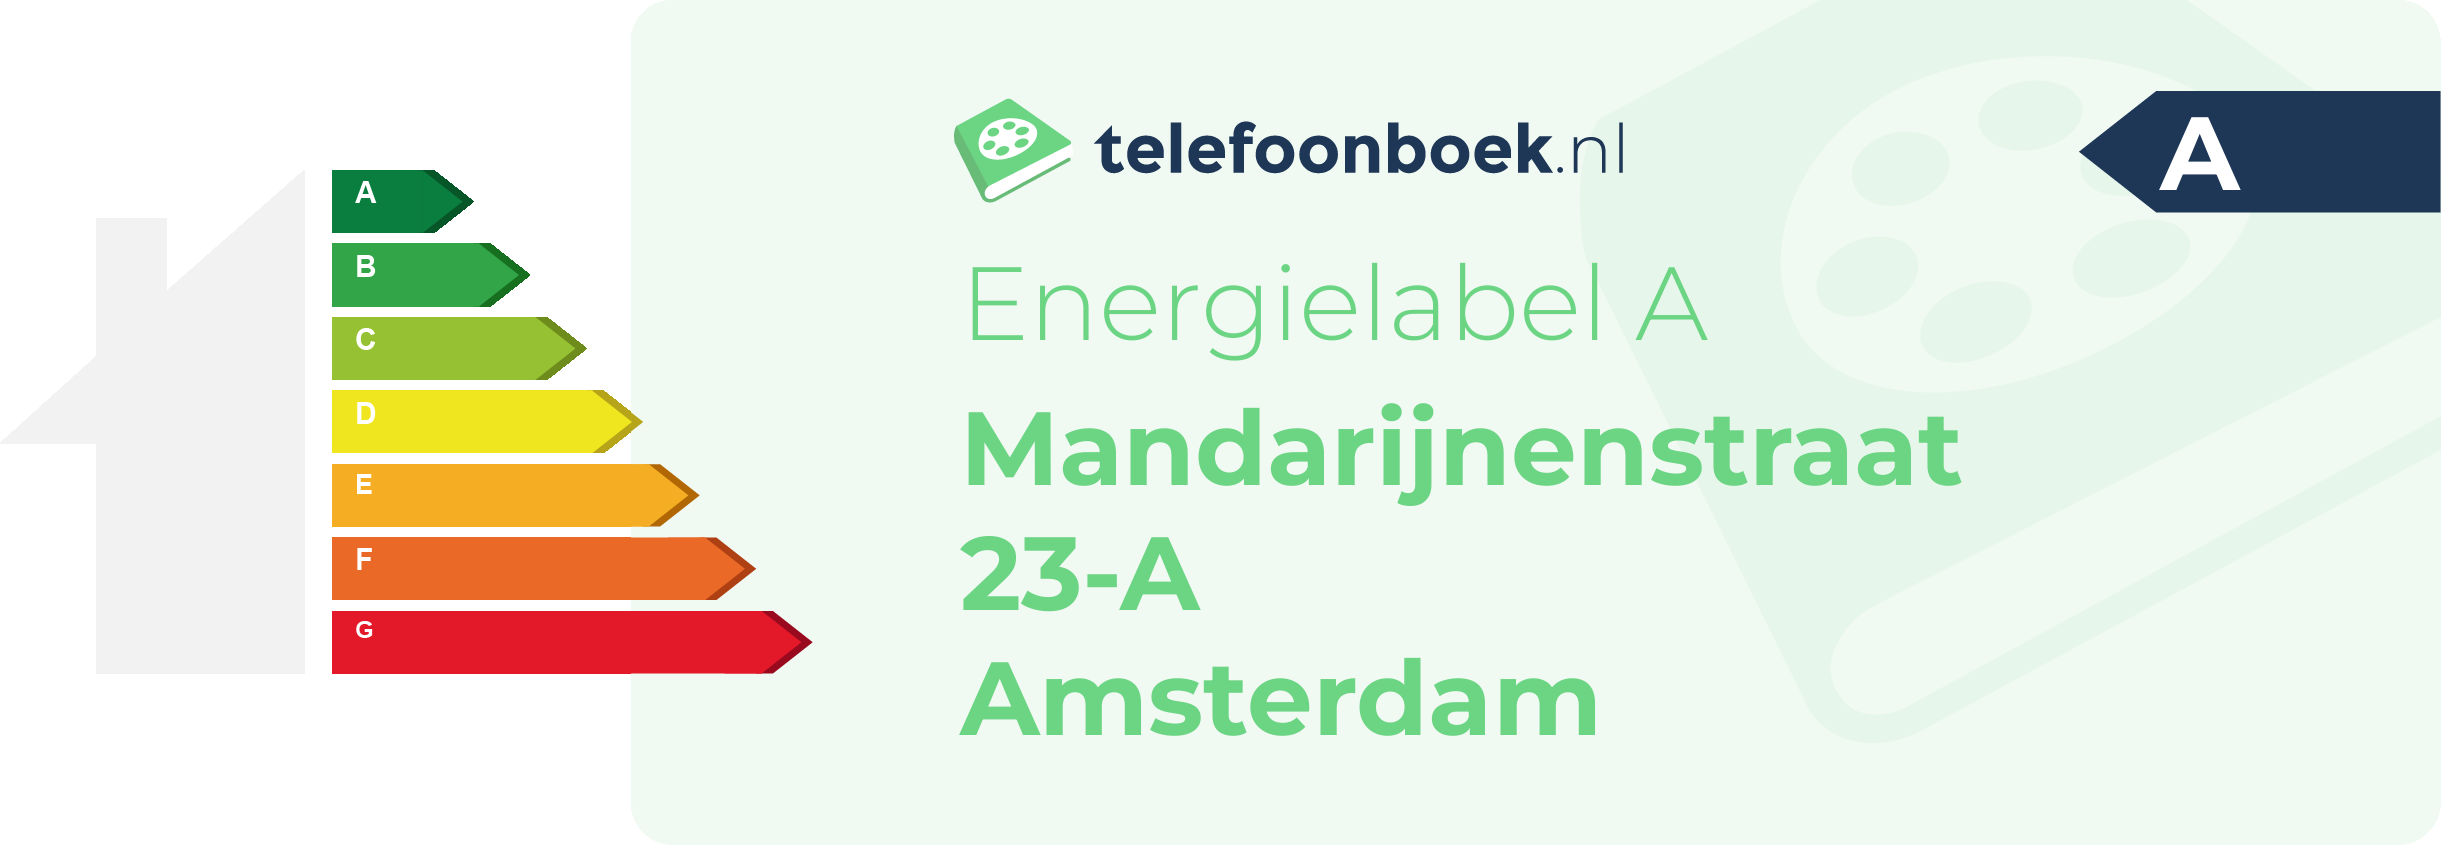 Energielabel Mandarijnenstraat 23-A Amsterdam